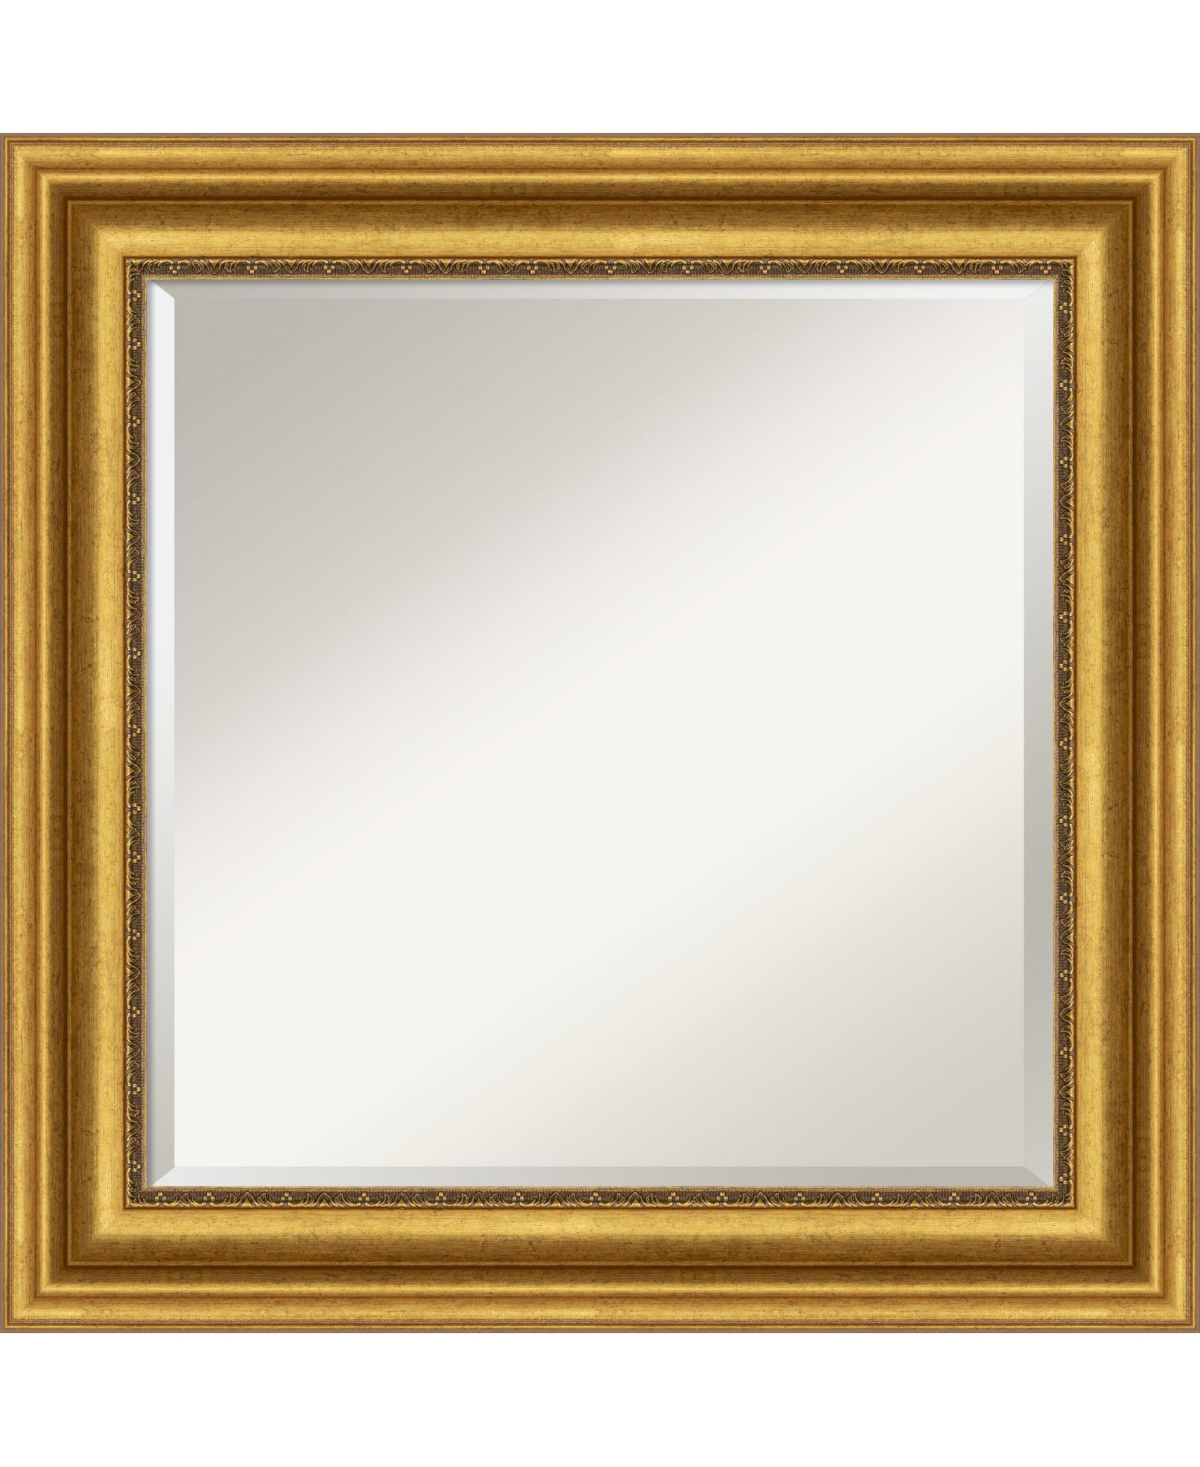 Parlor Gold-tone Framed Bathroom Vanity Wall Mirror, 25.62" x 25.62" - Gold